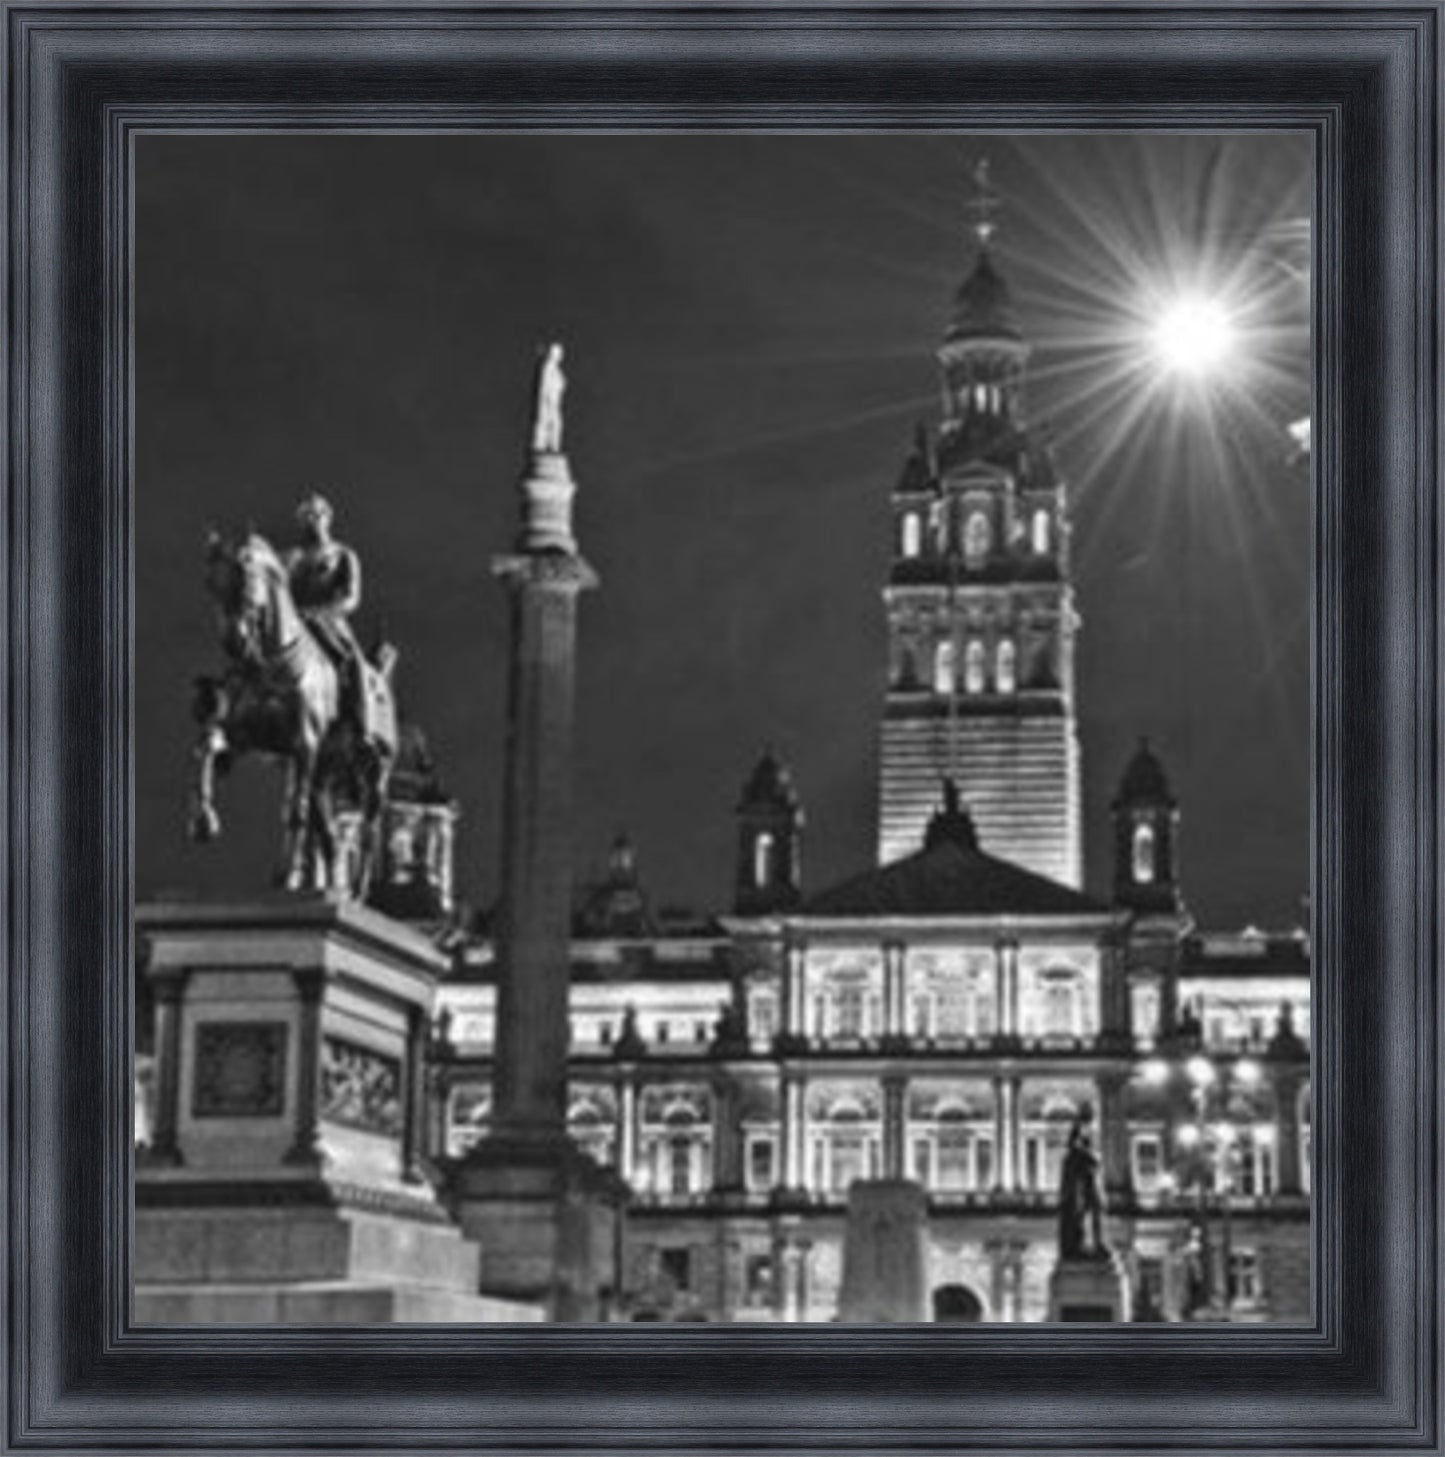 George Square, Glasgow - Black & White - Slim Frame